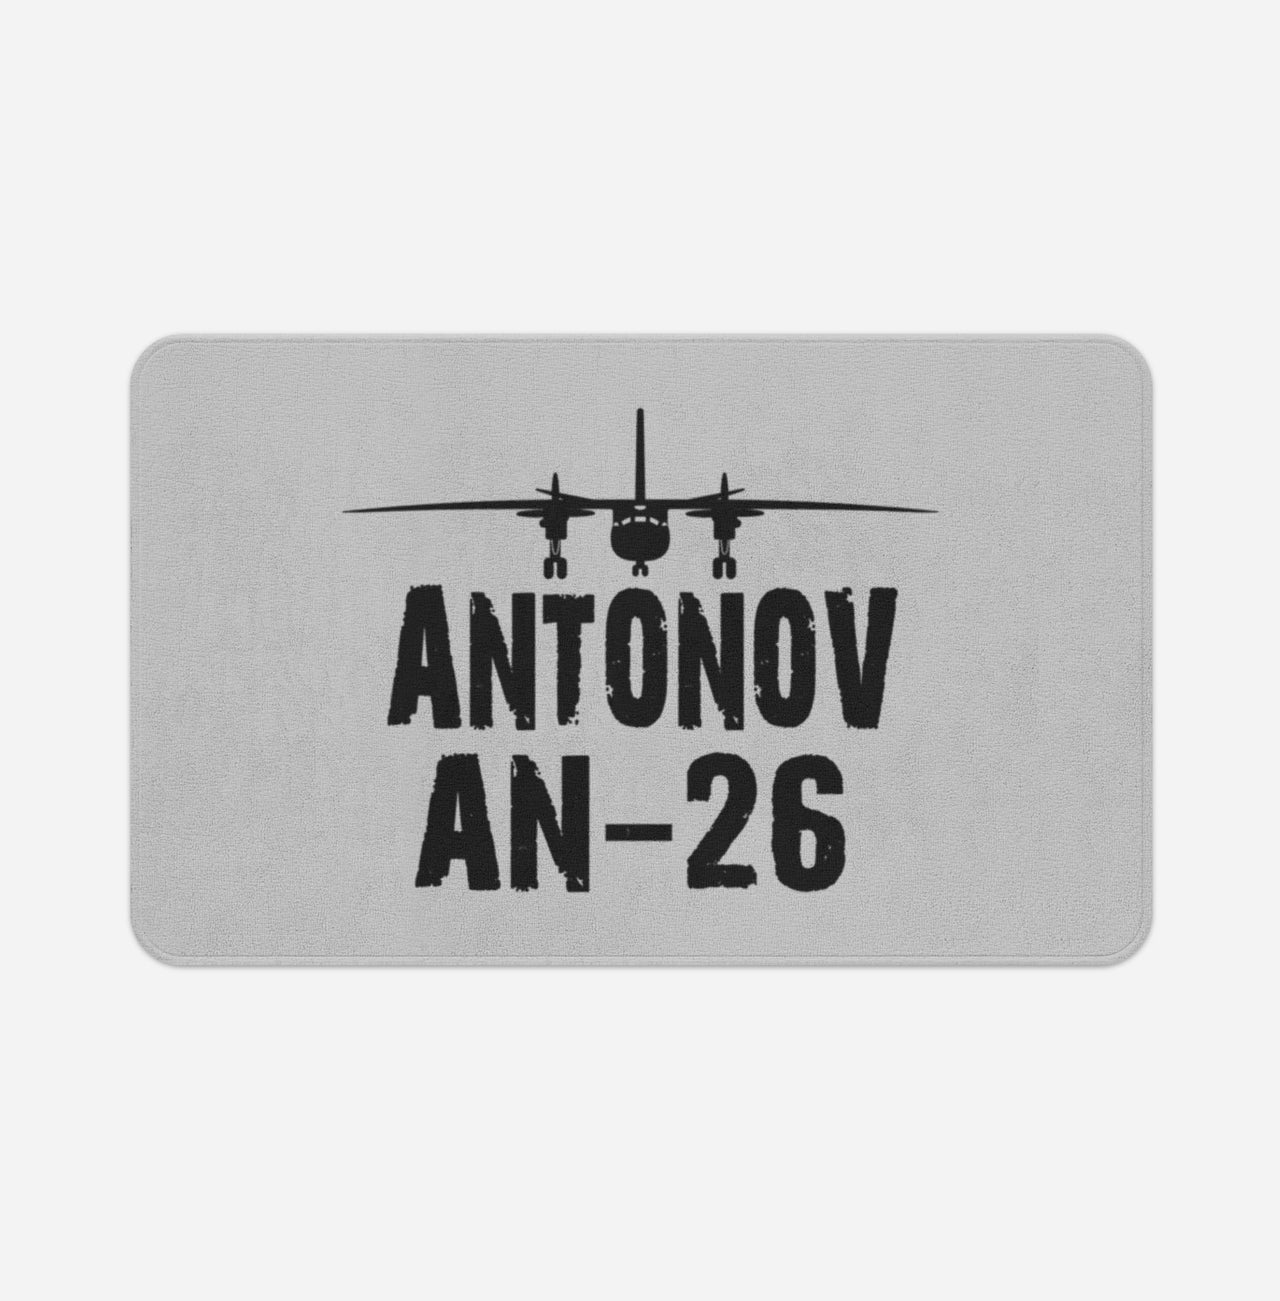 Antonov AN-26 & Plane Designed Bath Mats